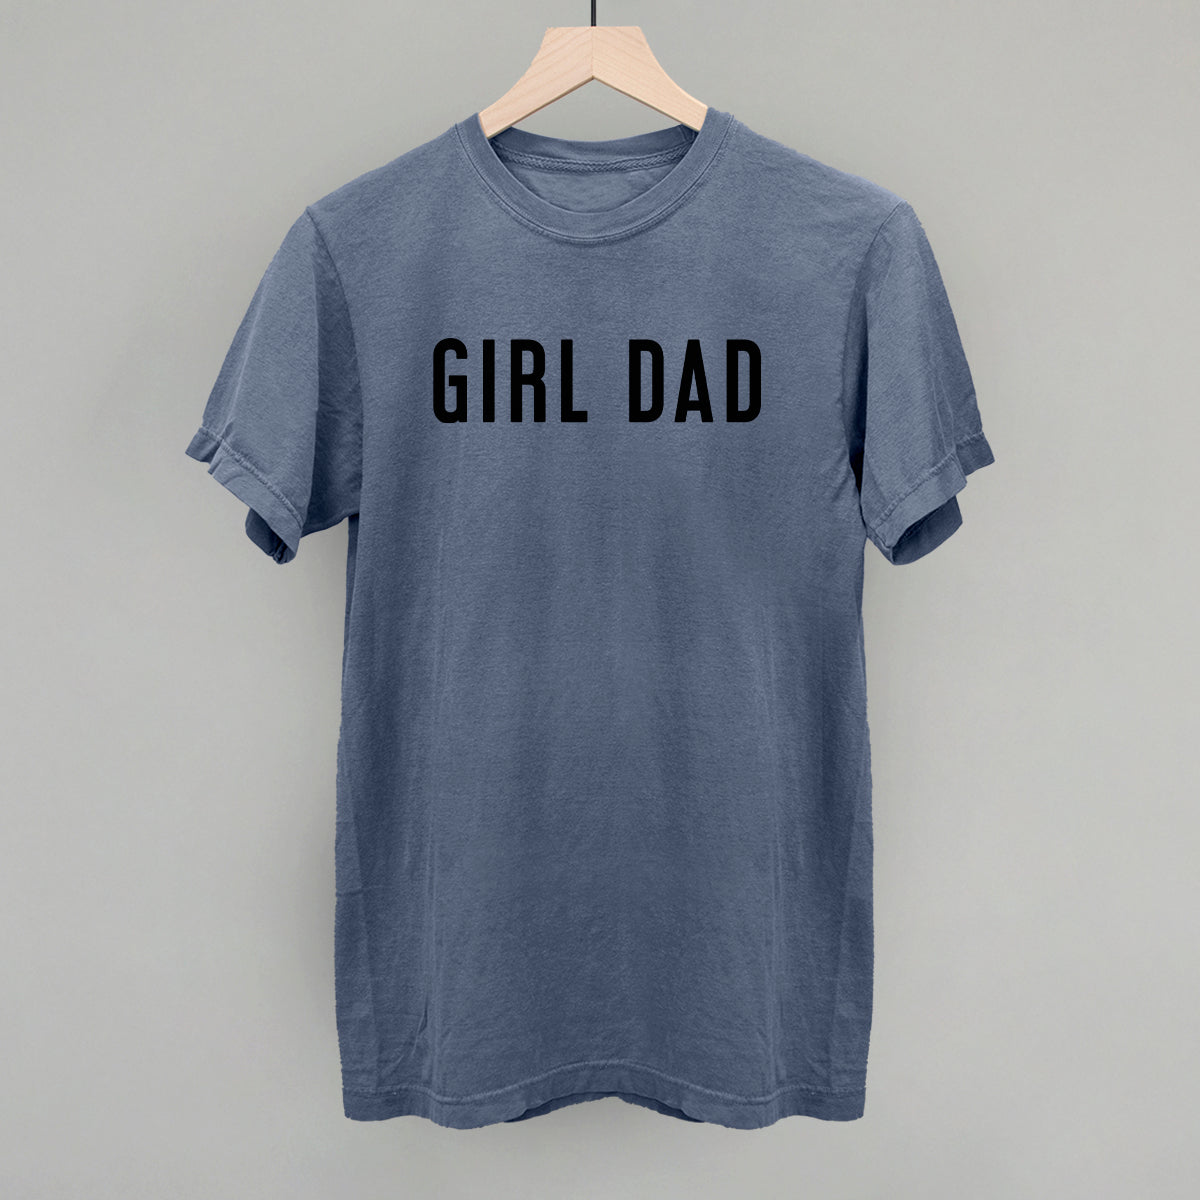 Girl Dad